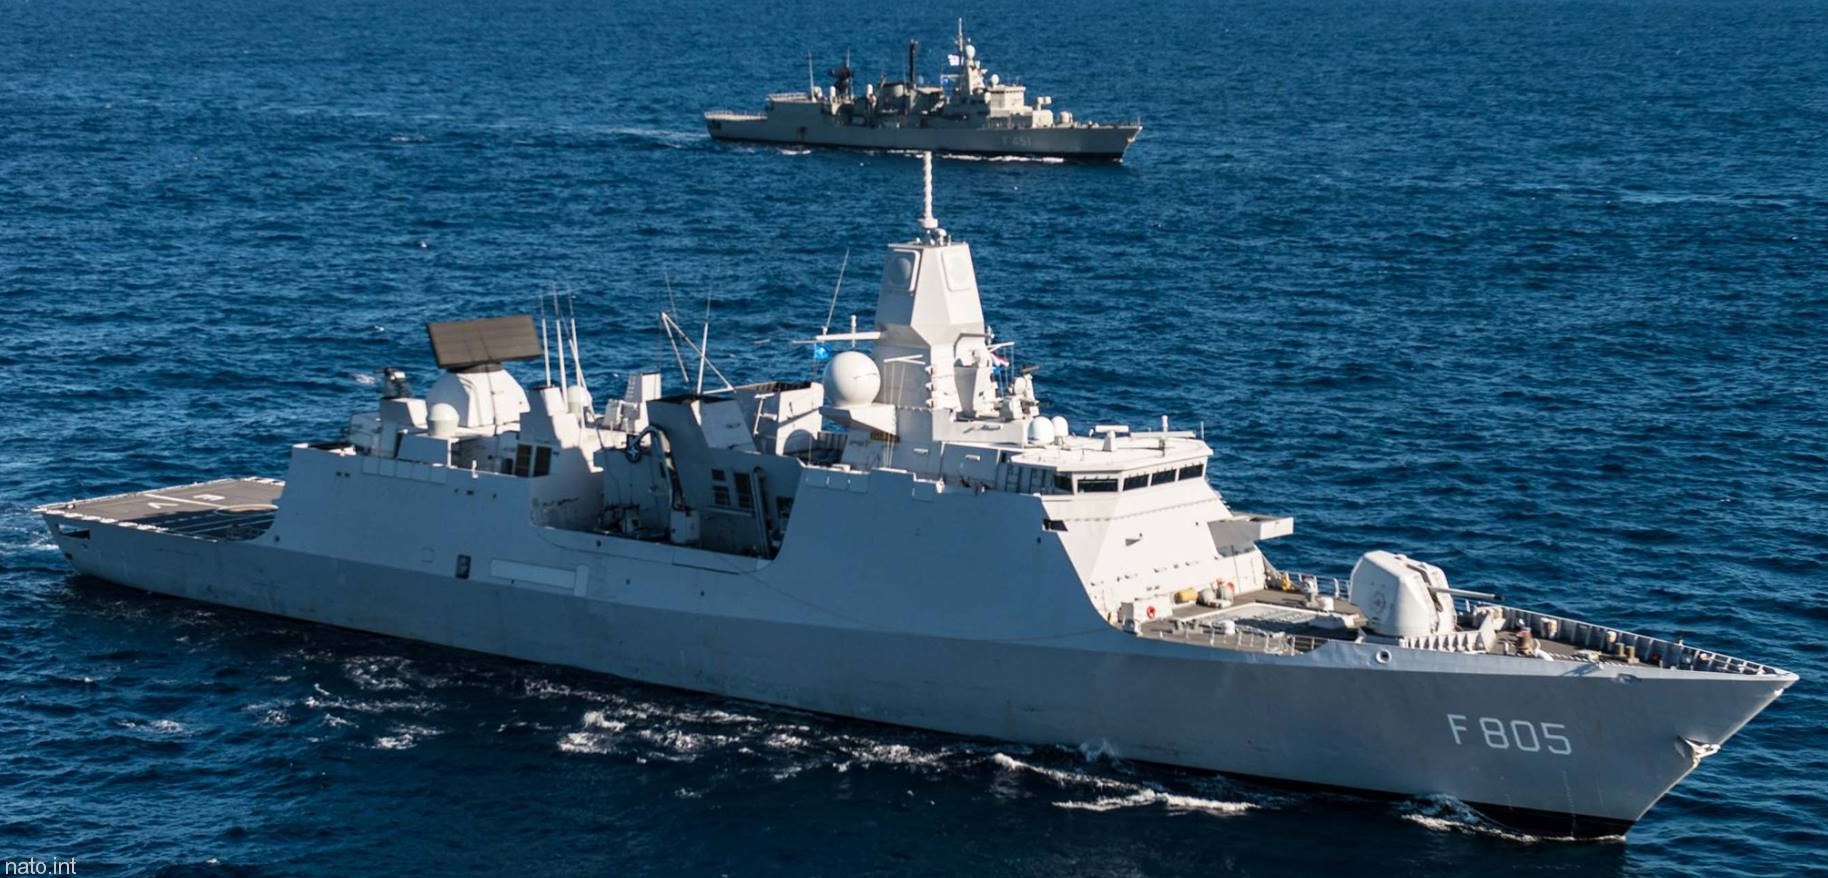 f-805 hnlms evertsen guided missile frigate ffg lcf royal netherlands navy 26